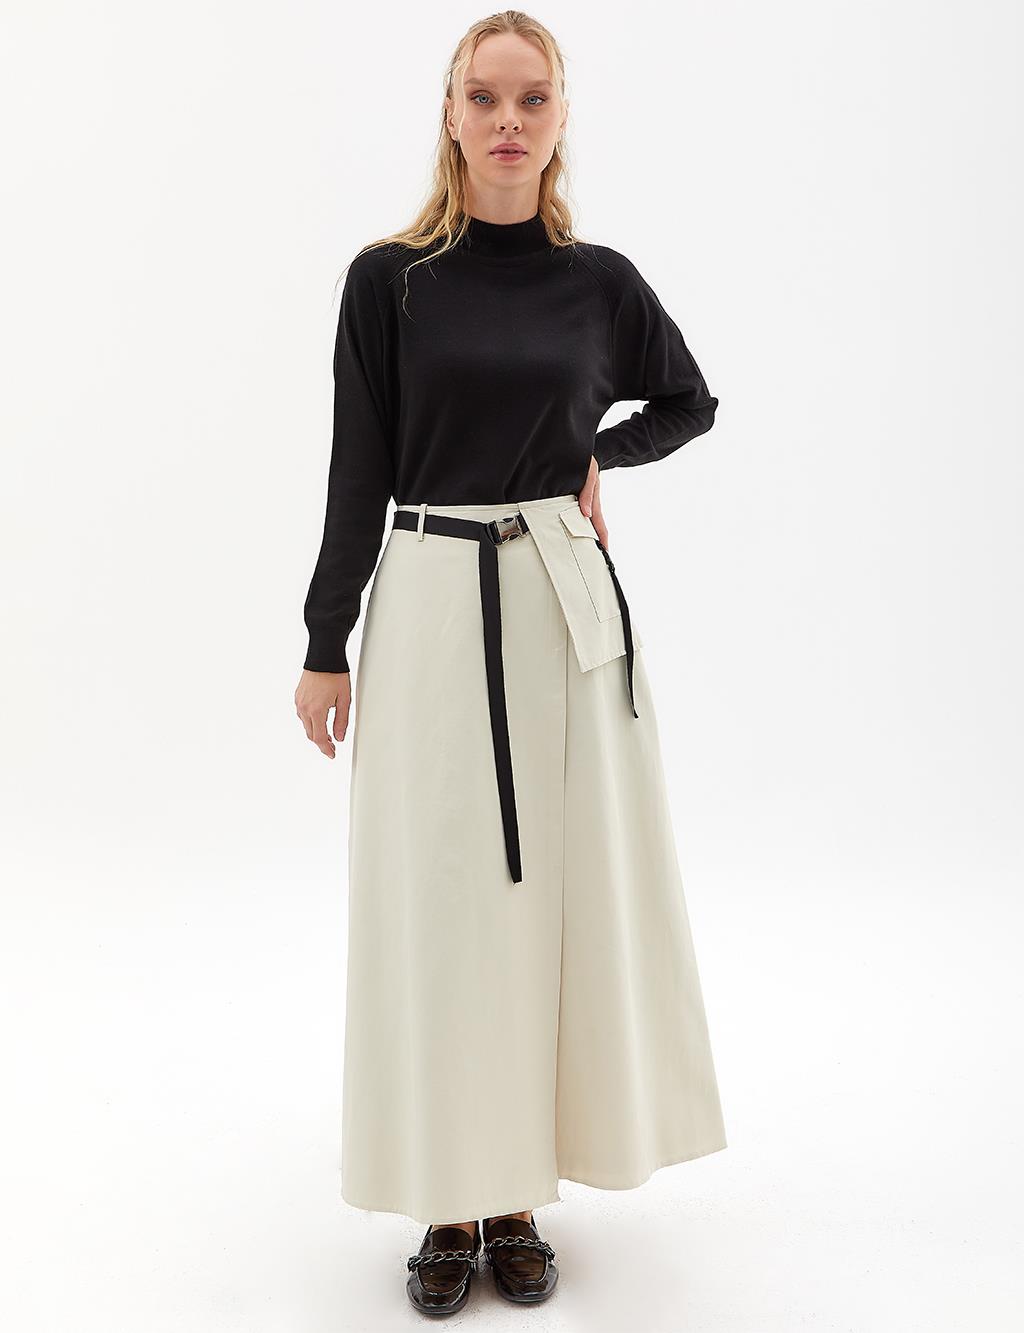 A-Line Skirt with Big Pockets Cream